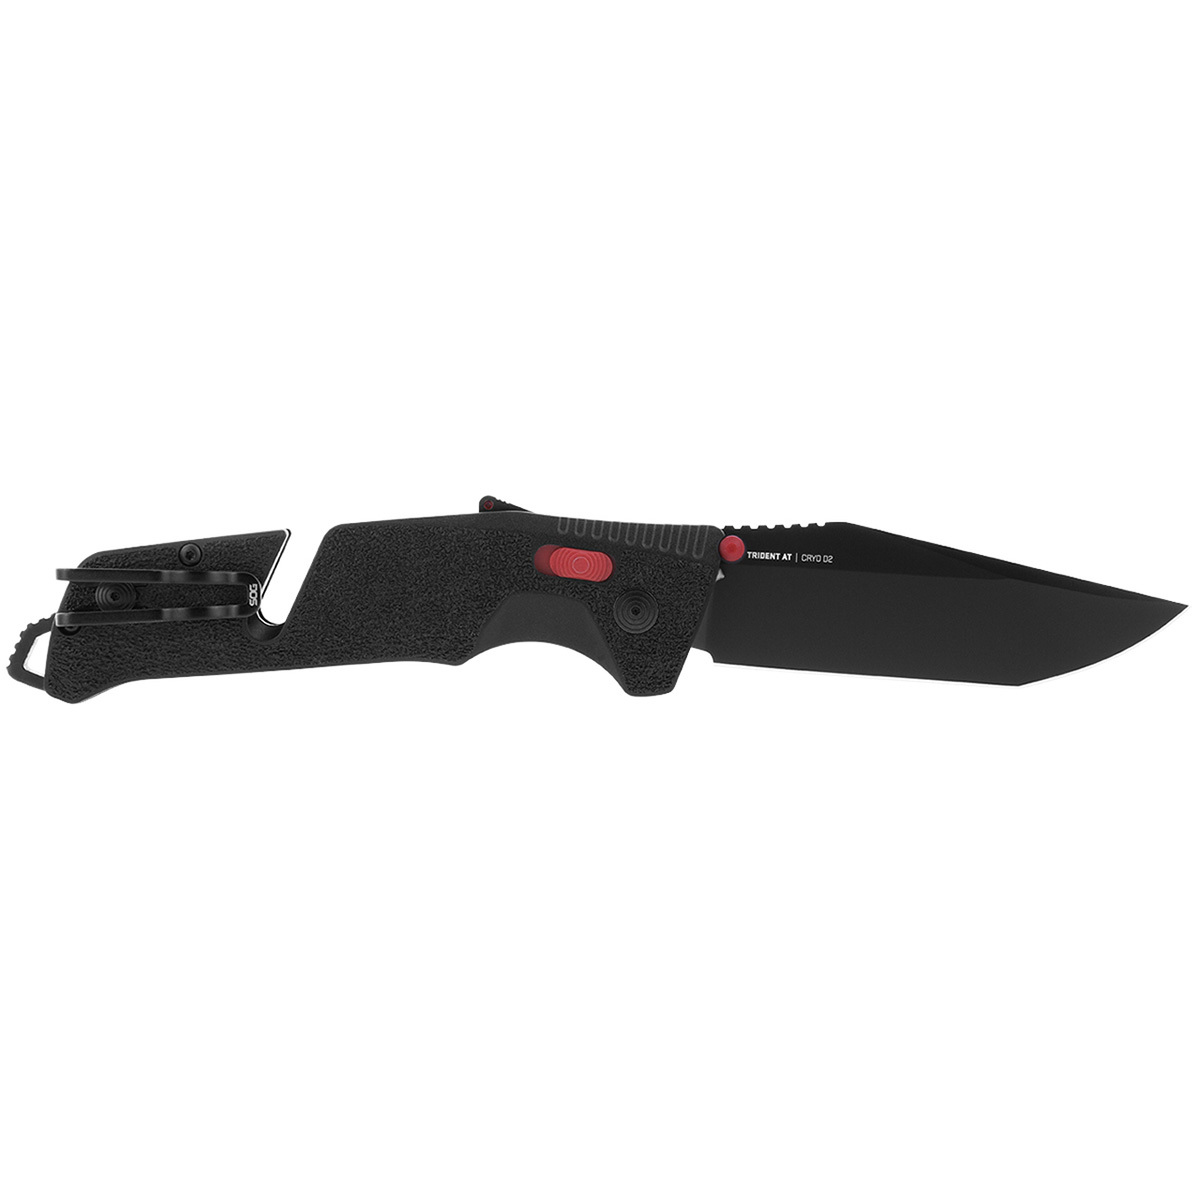 Полуавтоматический складной нож Trident Mk3 Black-Red Tanto, сталь D2, рукоять GRN - фото 2